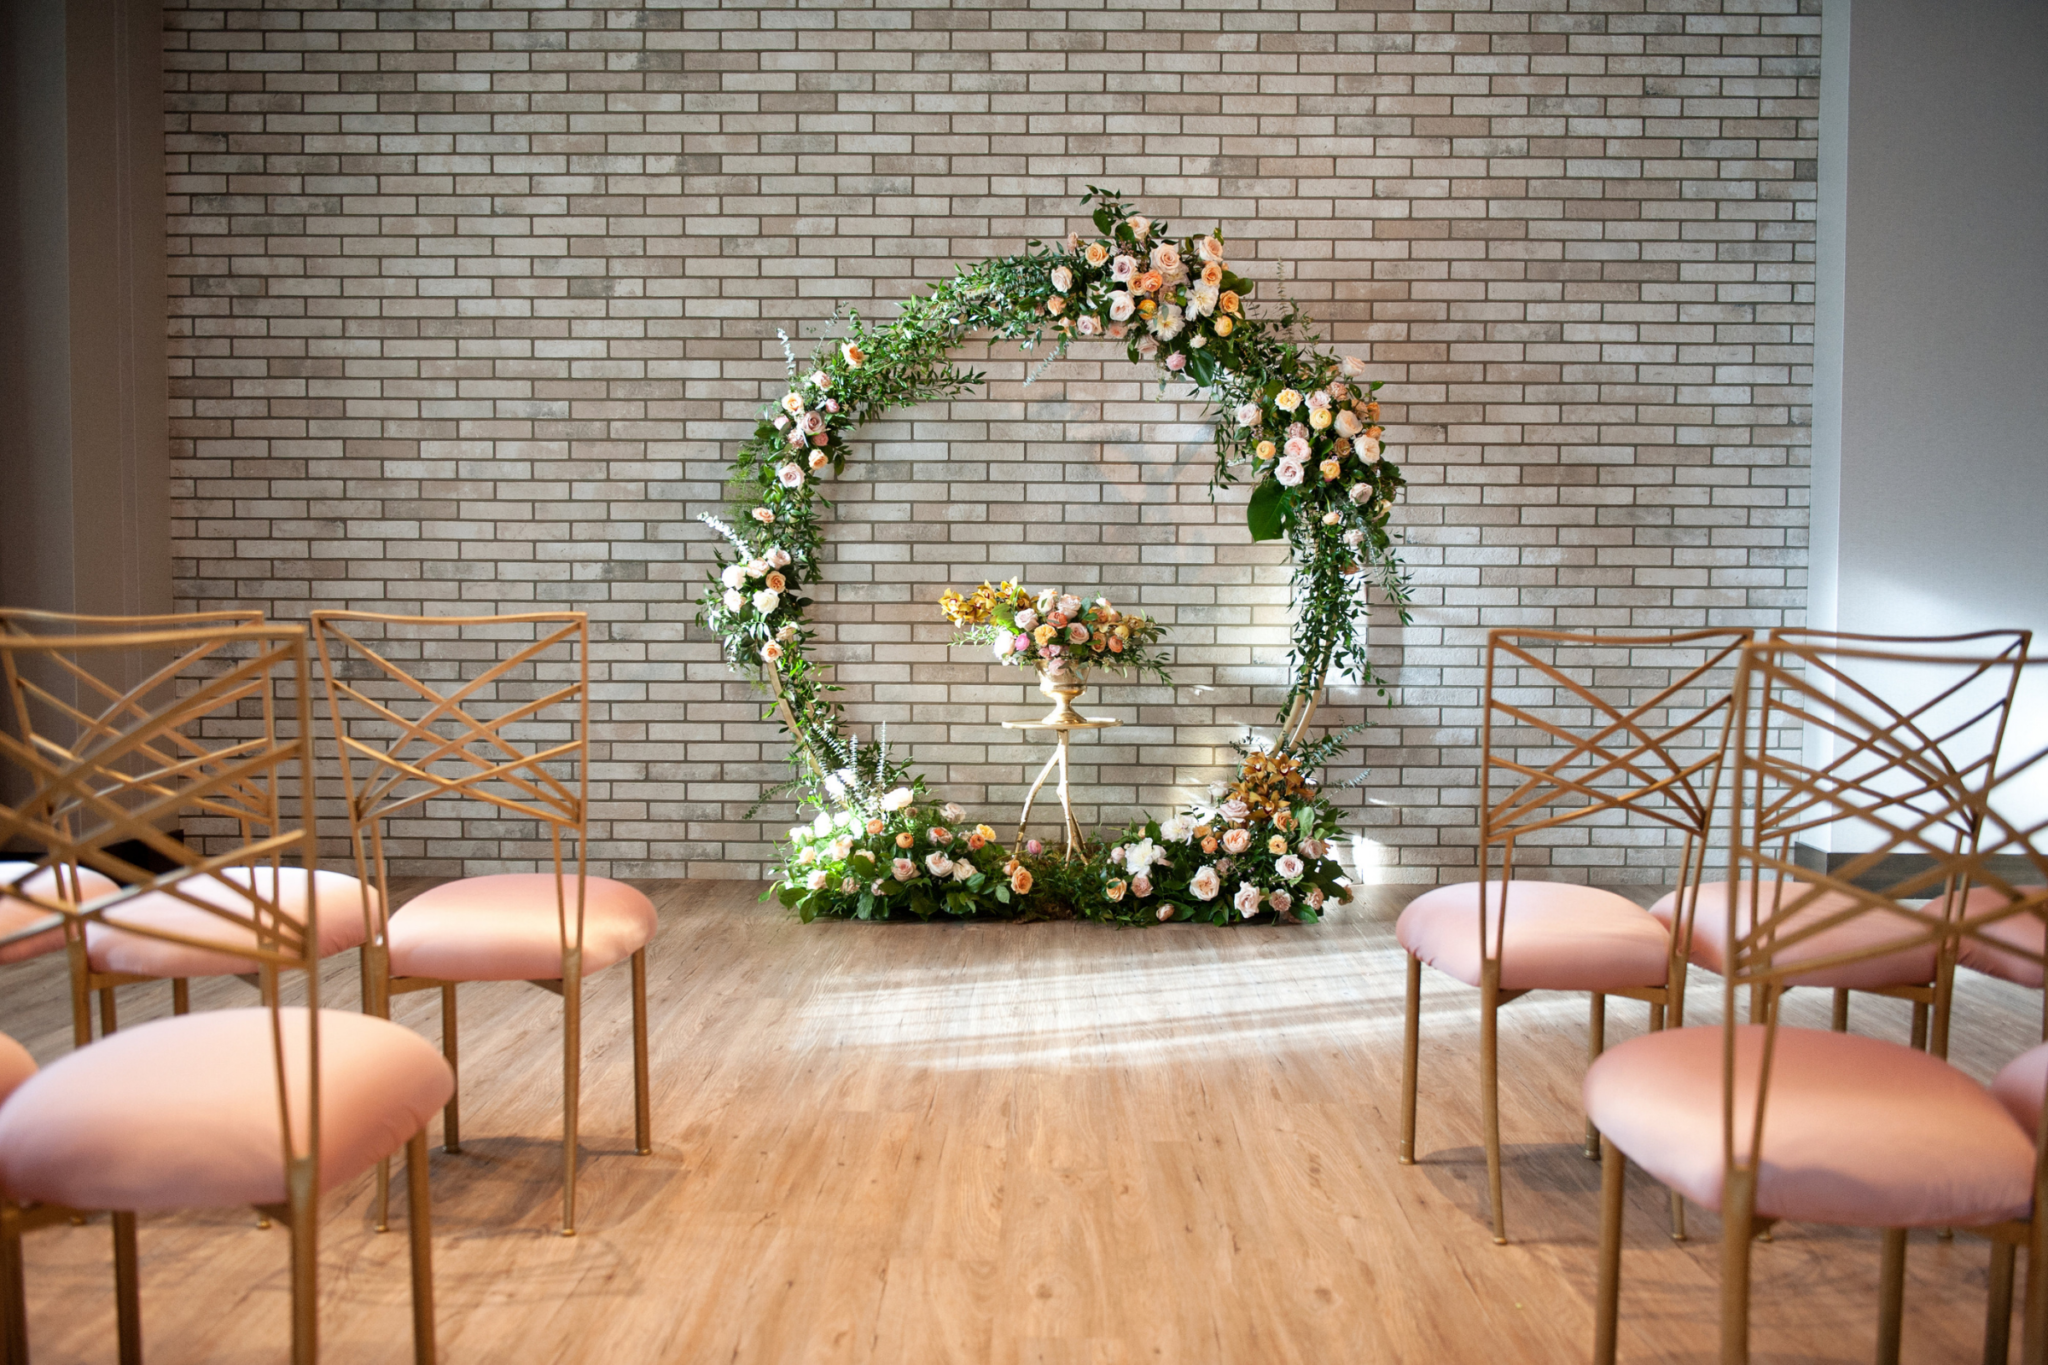 Floral designs for a modern wedding